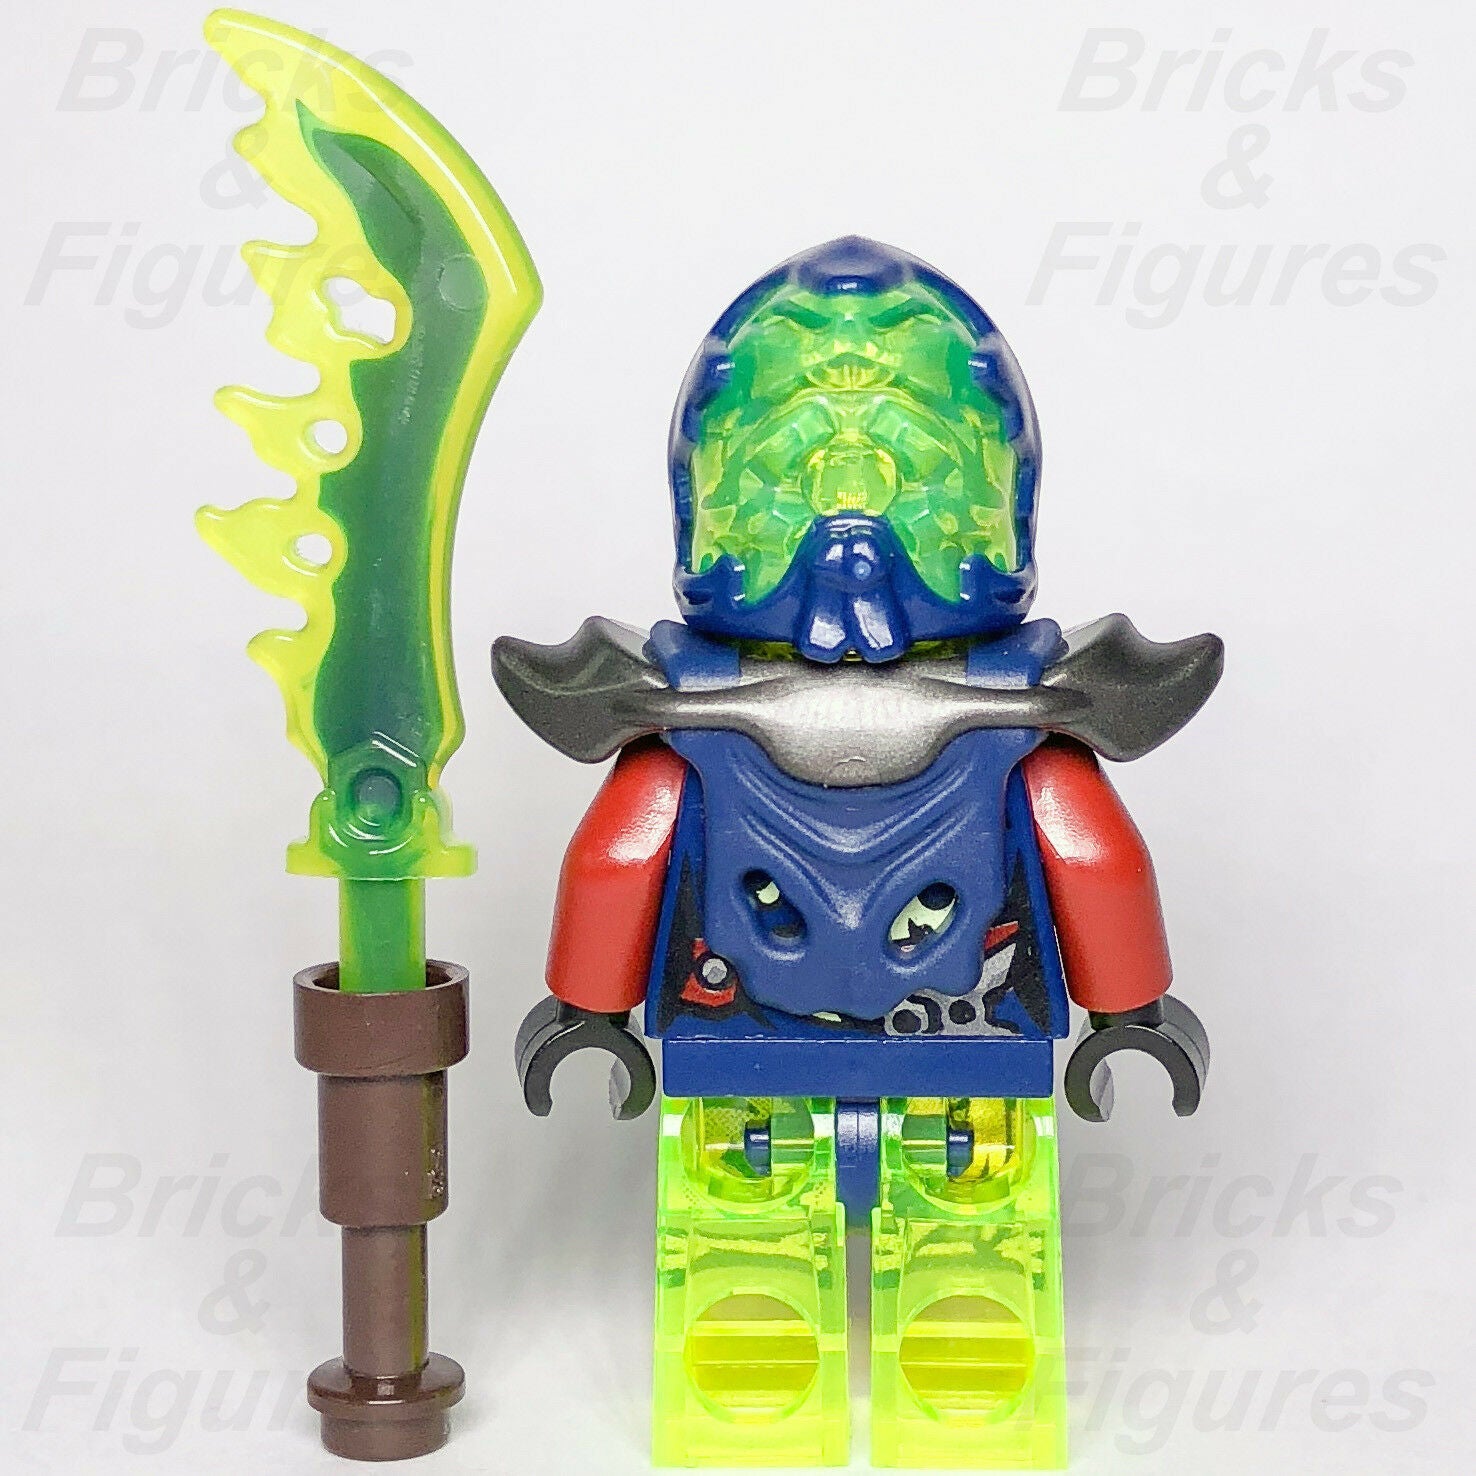 New Ninjago LEGO Blade Master Bansha Minifigure Ghost from Cursed Realm 70737 - Bricks & Figures